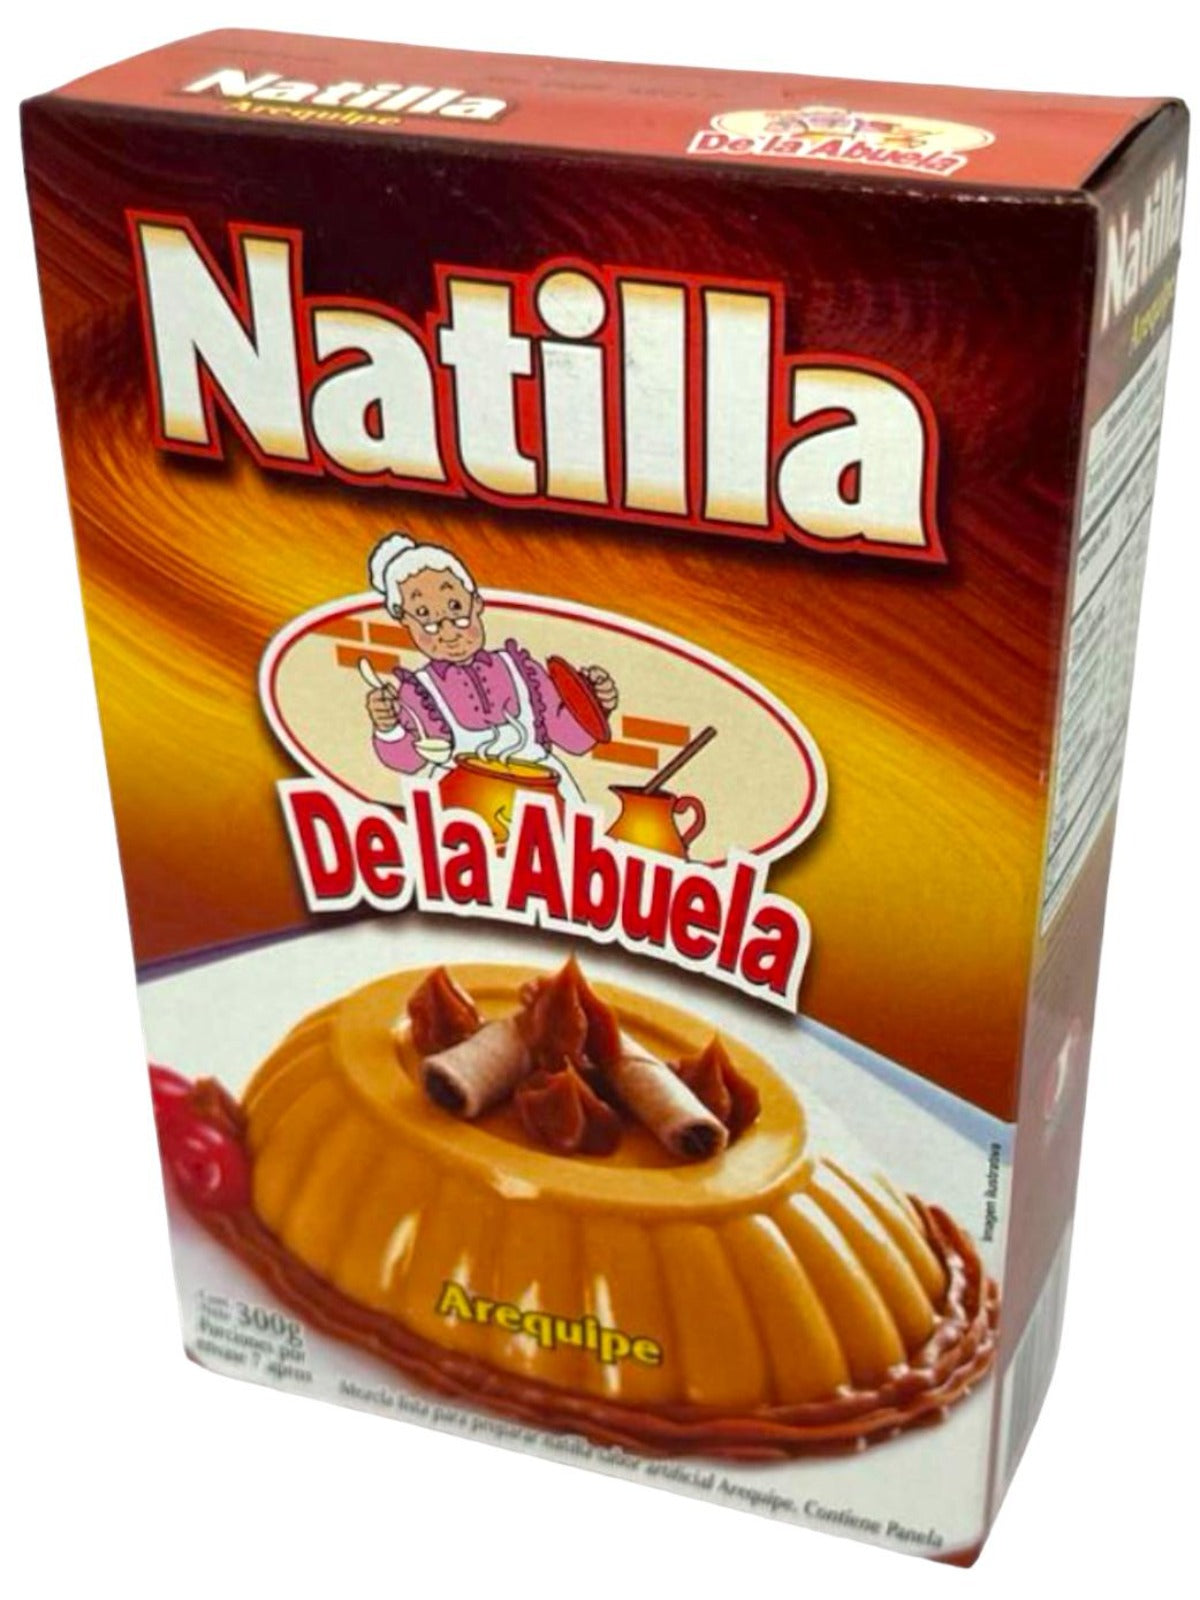 De la Abuela Natilla Arequipe Colombian Caramel Pudding 300g Use By November 2025